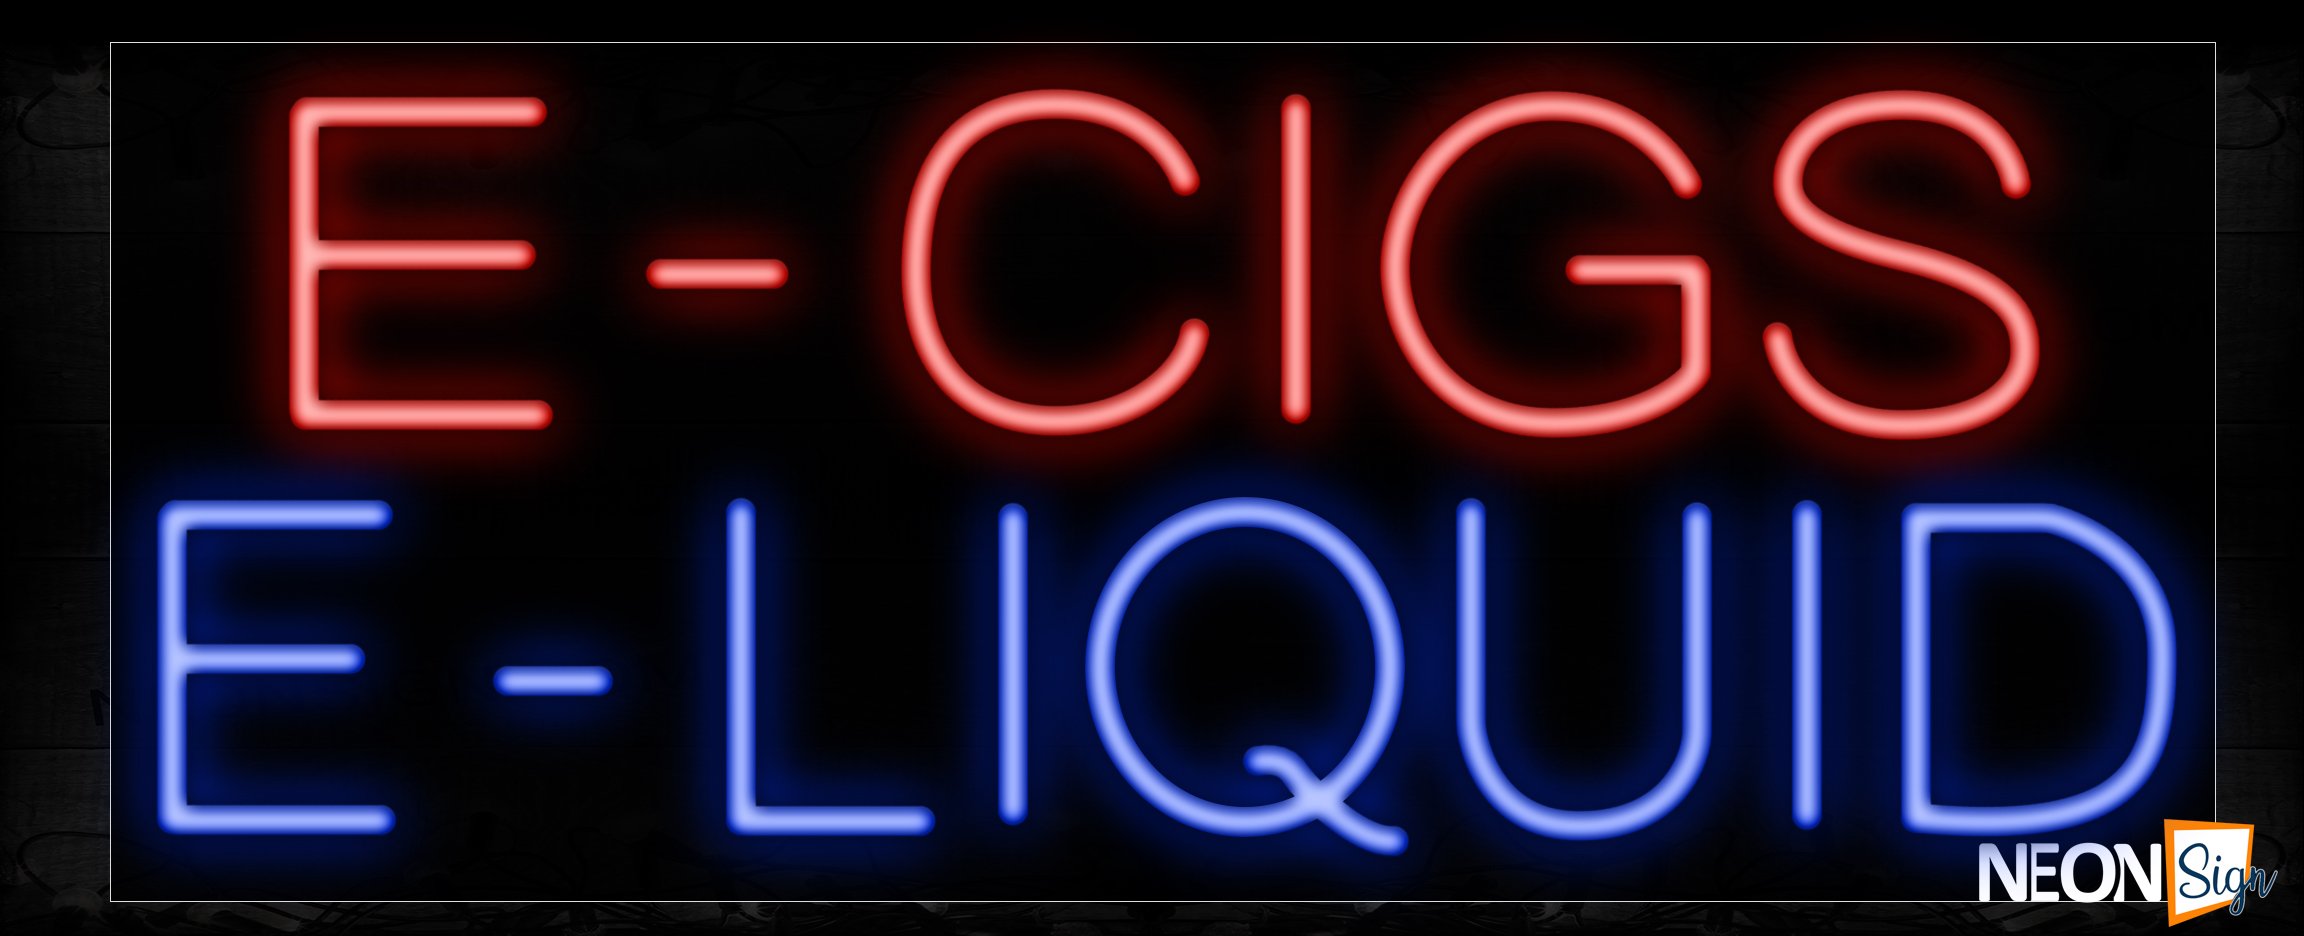 Image of 11391 E-Cigs E-Liquid Neon Sign_13x32 Black Backing